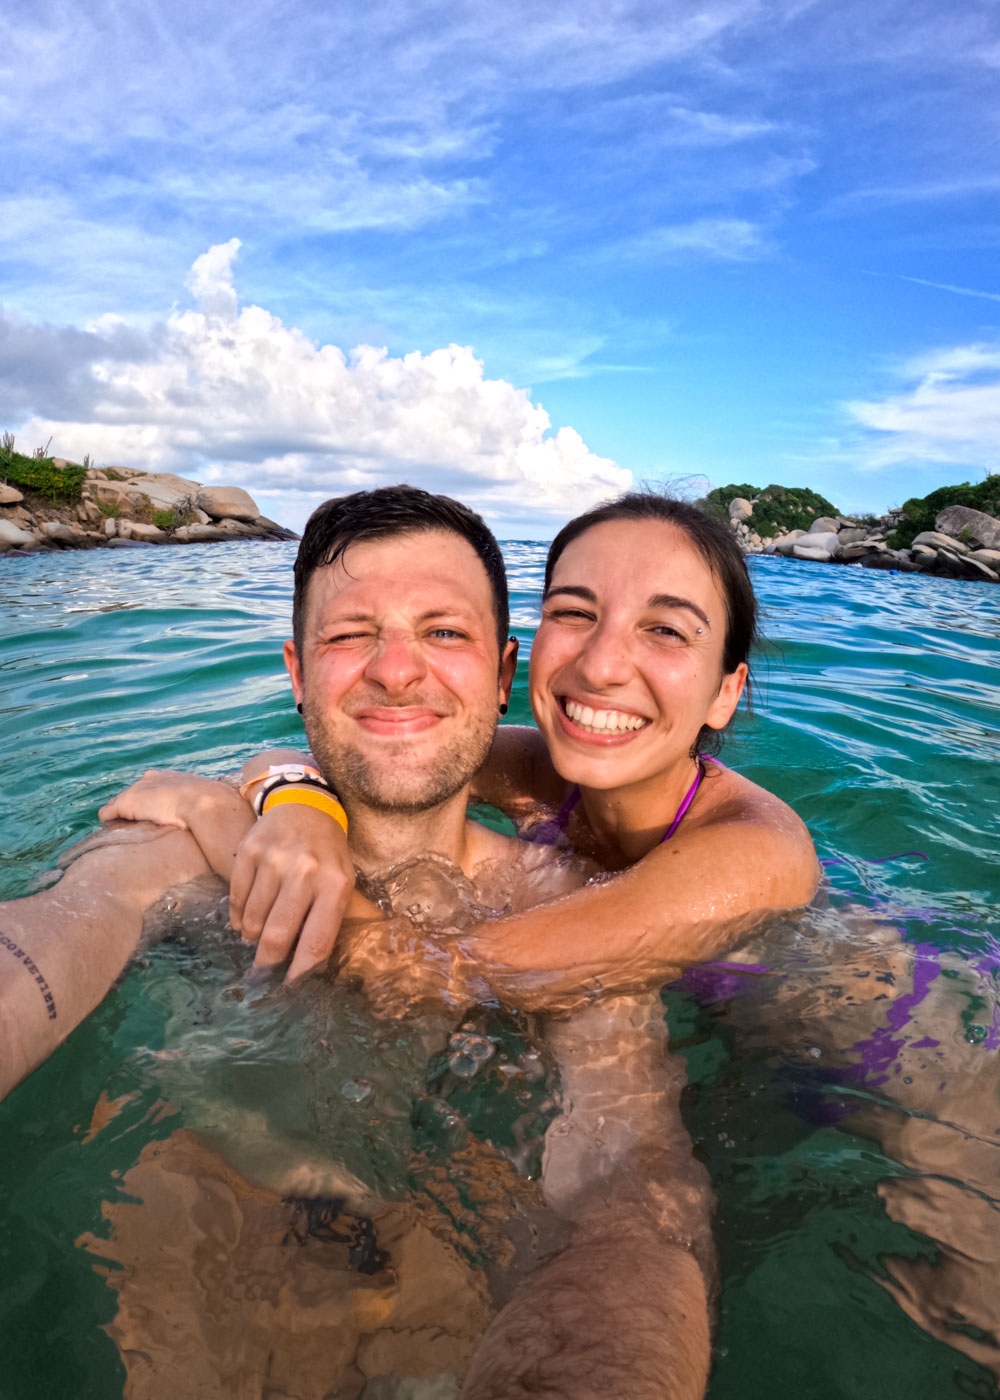 Ryan and Sara taking a selfie while swimming in the Caribbean sea at Cabo San Juan.